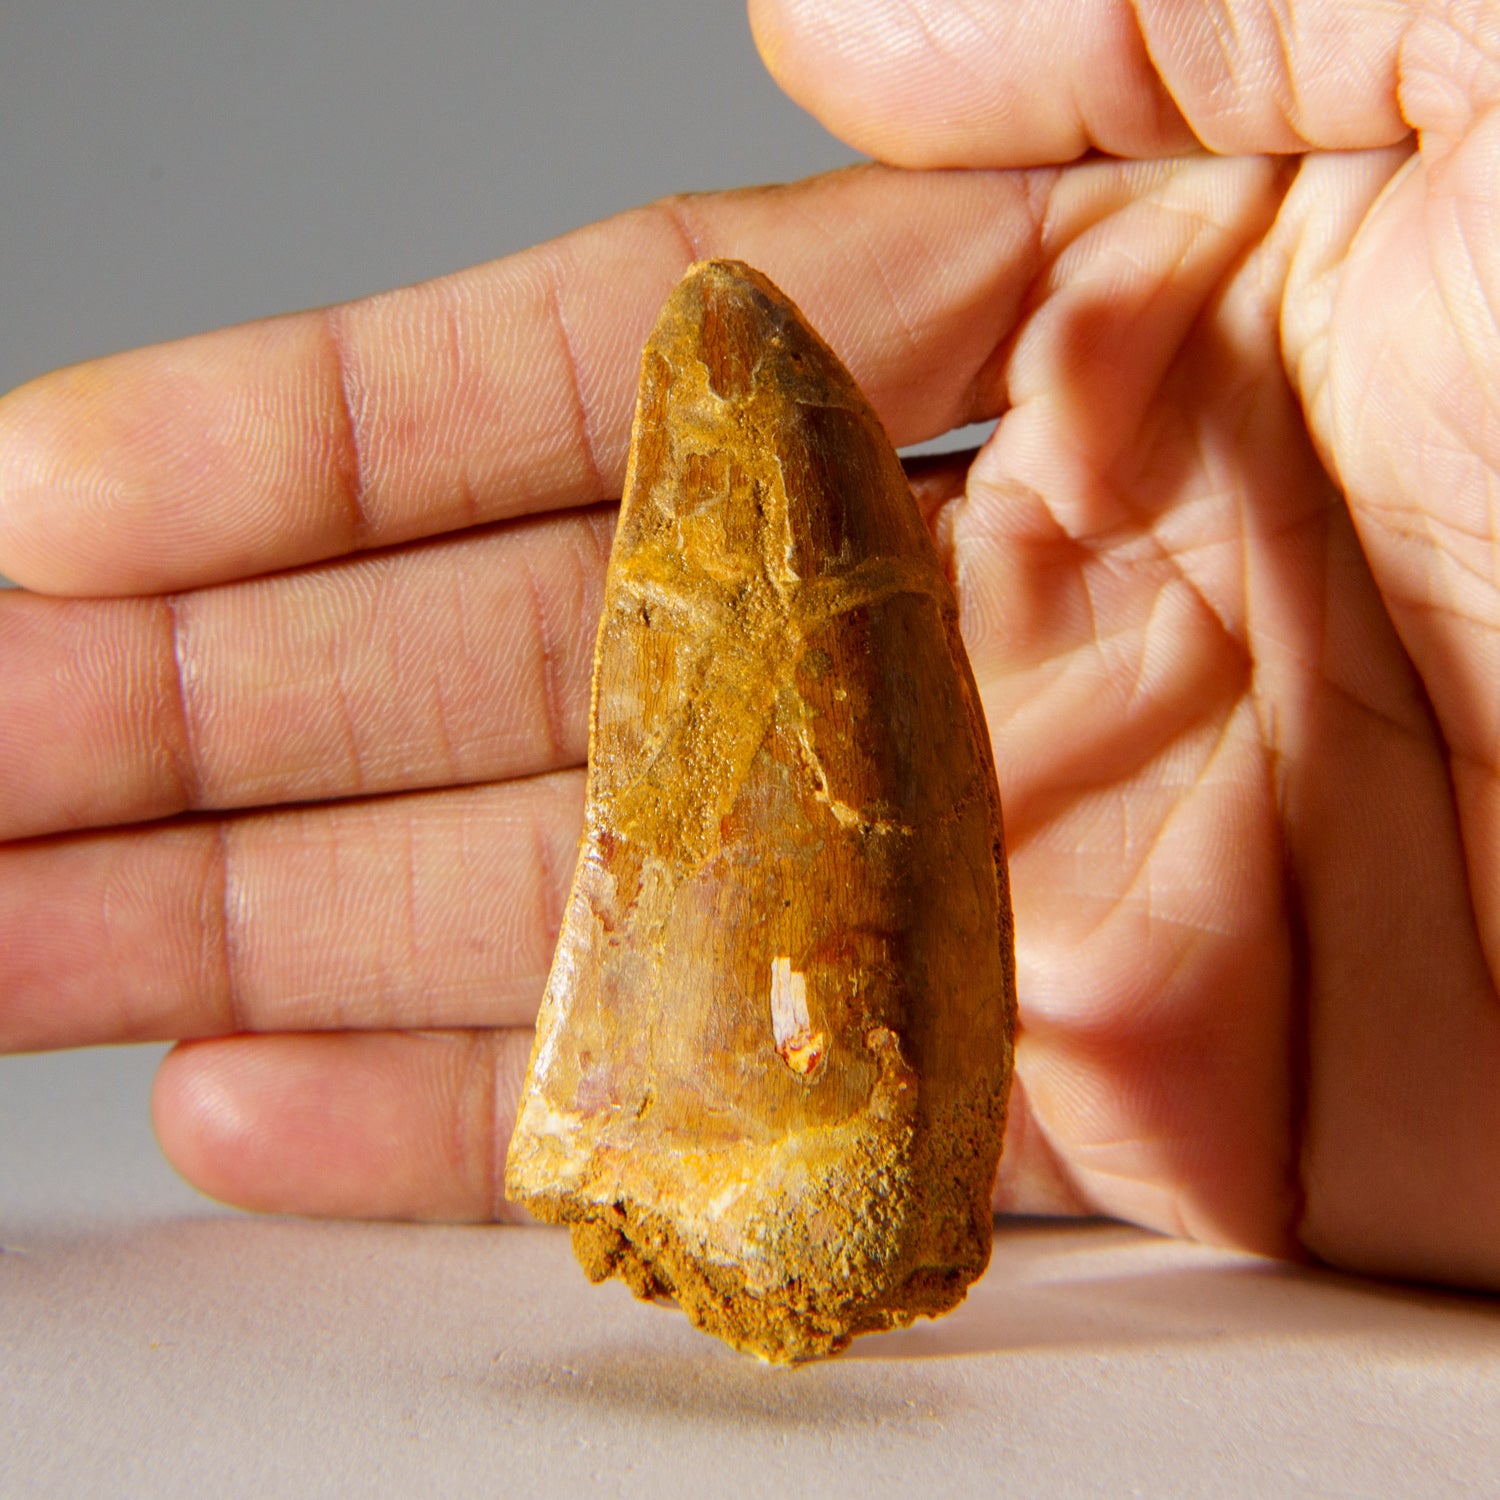 Genuine Carcharodontosaurus Tooth in Display Box (35.8 grams)